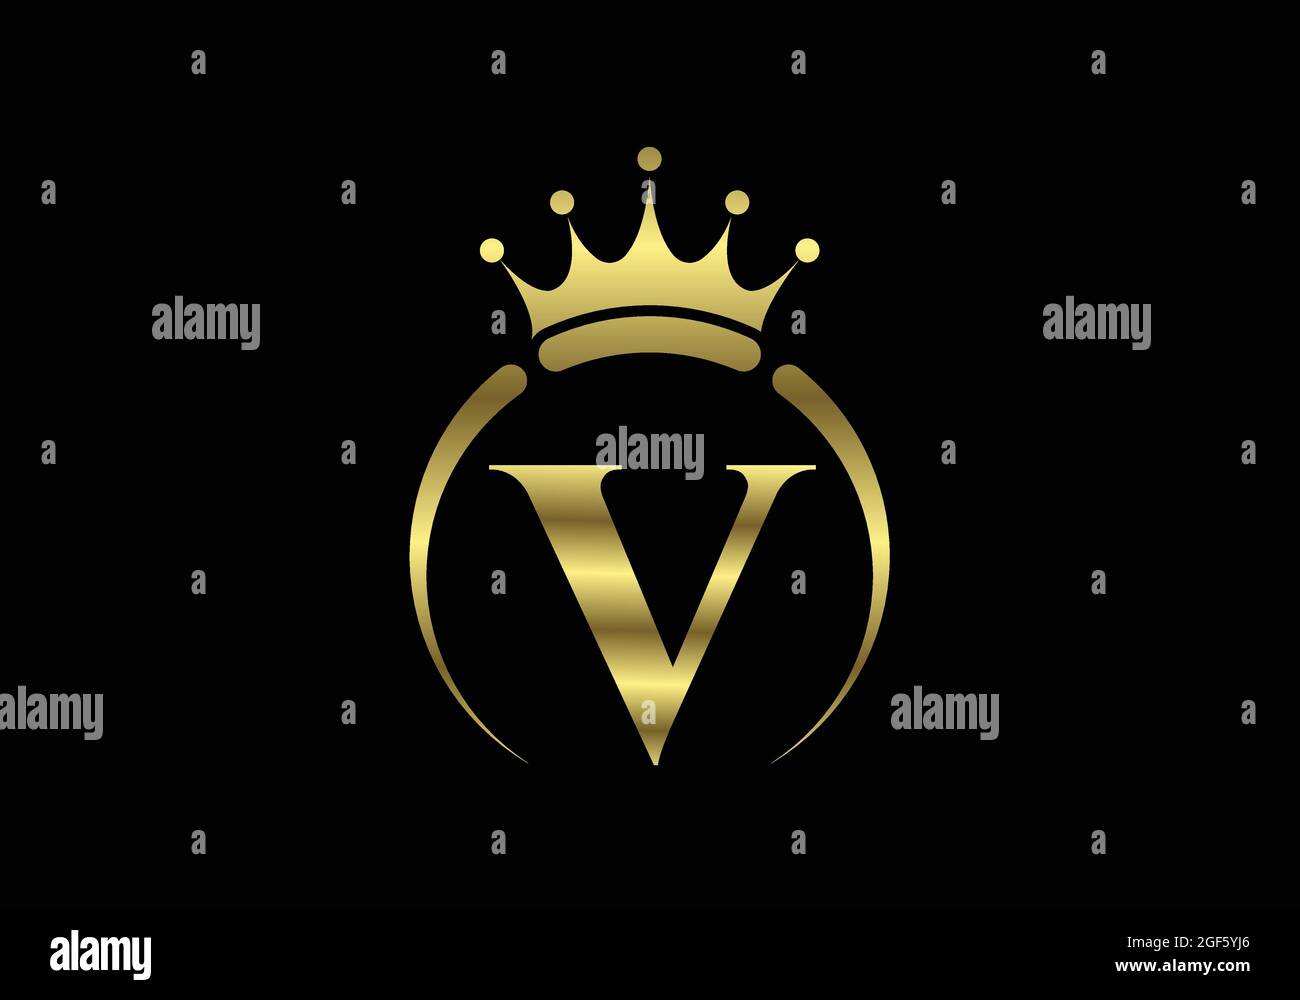 Crown letter v Stock Vector Images - Alamy